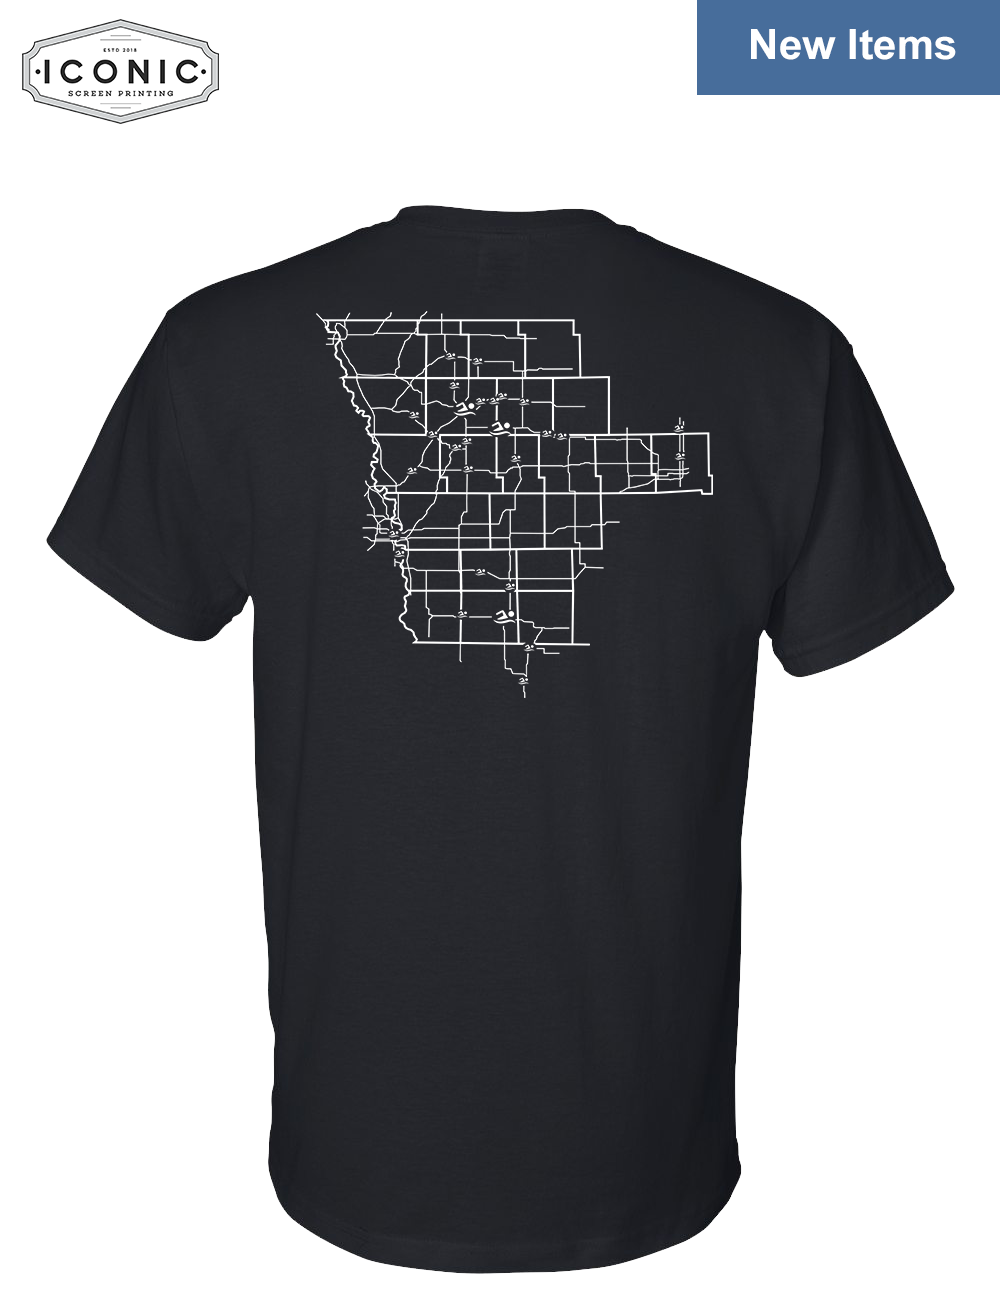 Stingrays with Map - DryBlend T-shirt